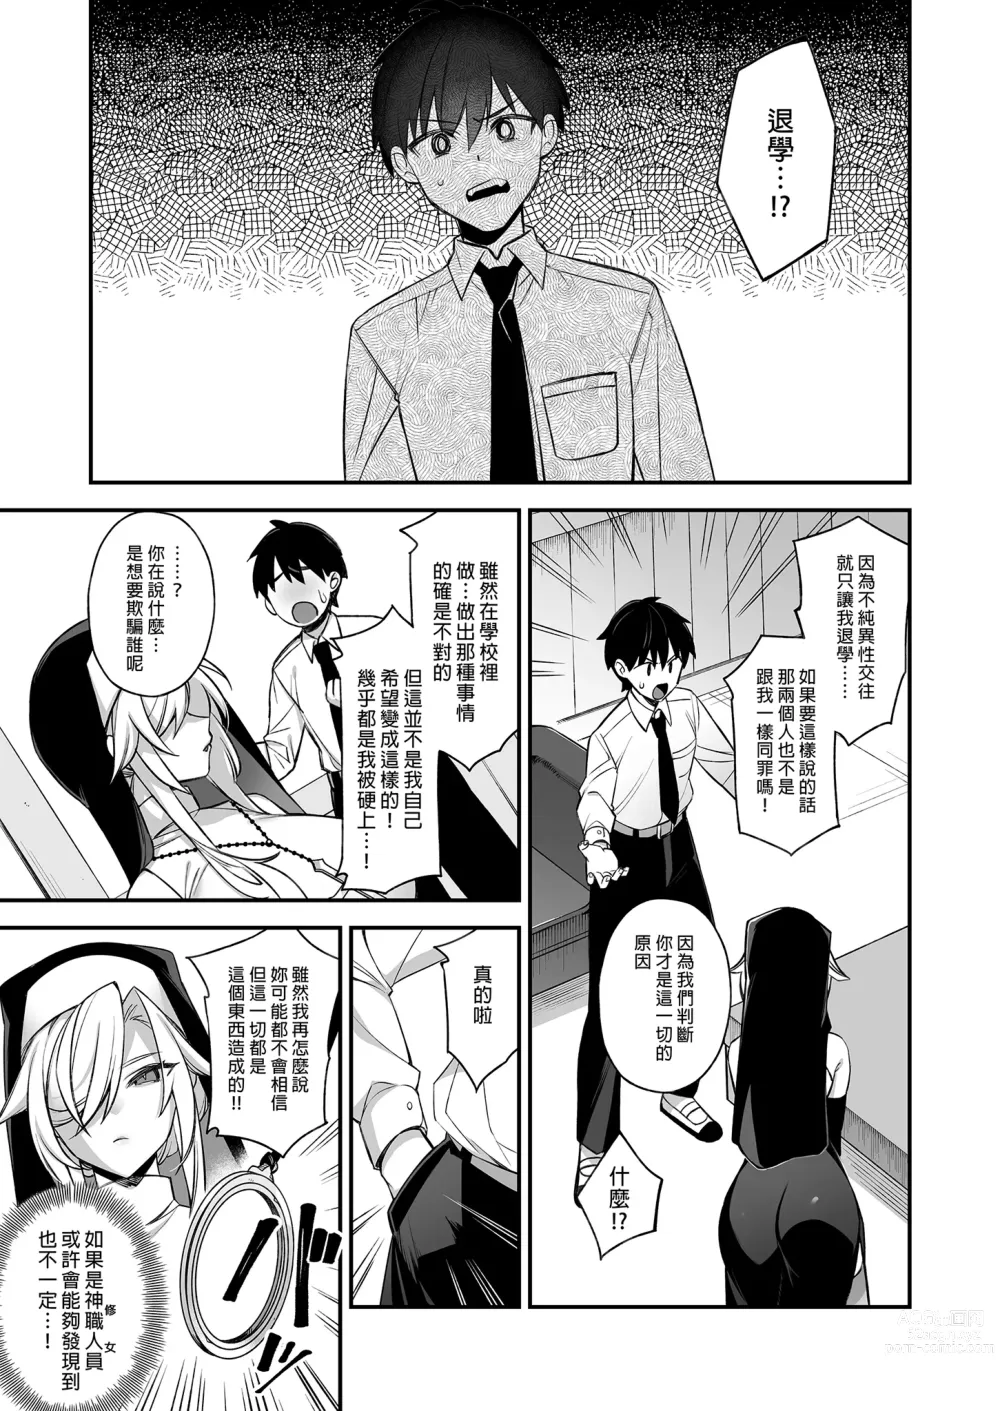 Page 16 of manga Hypnosis 2 (uncensored)